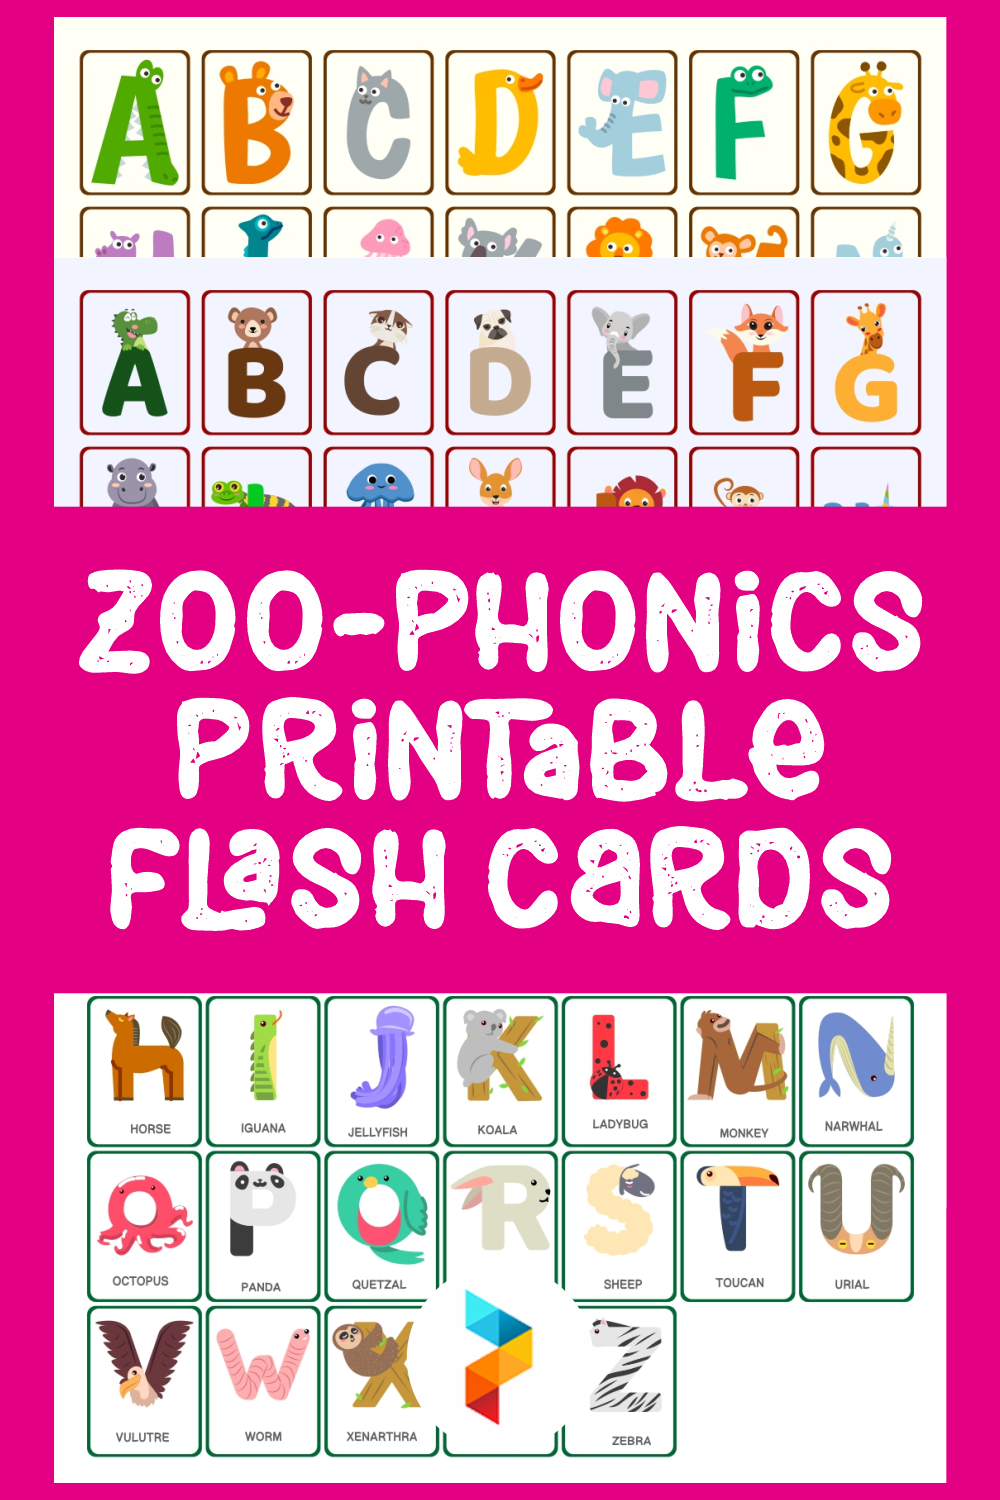 Zoo Phonics Free Printables Printable Word Searches